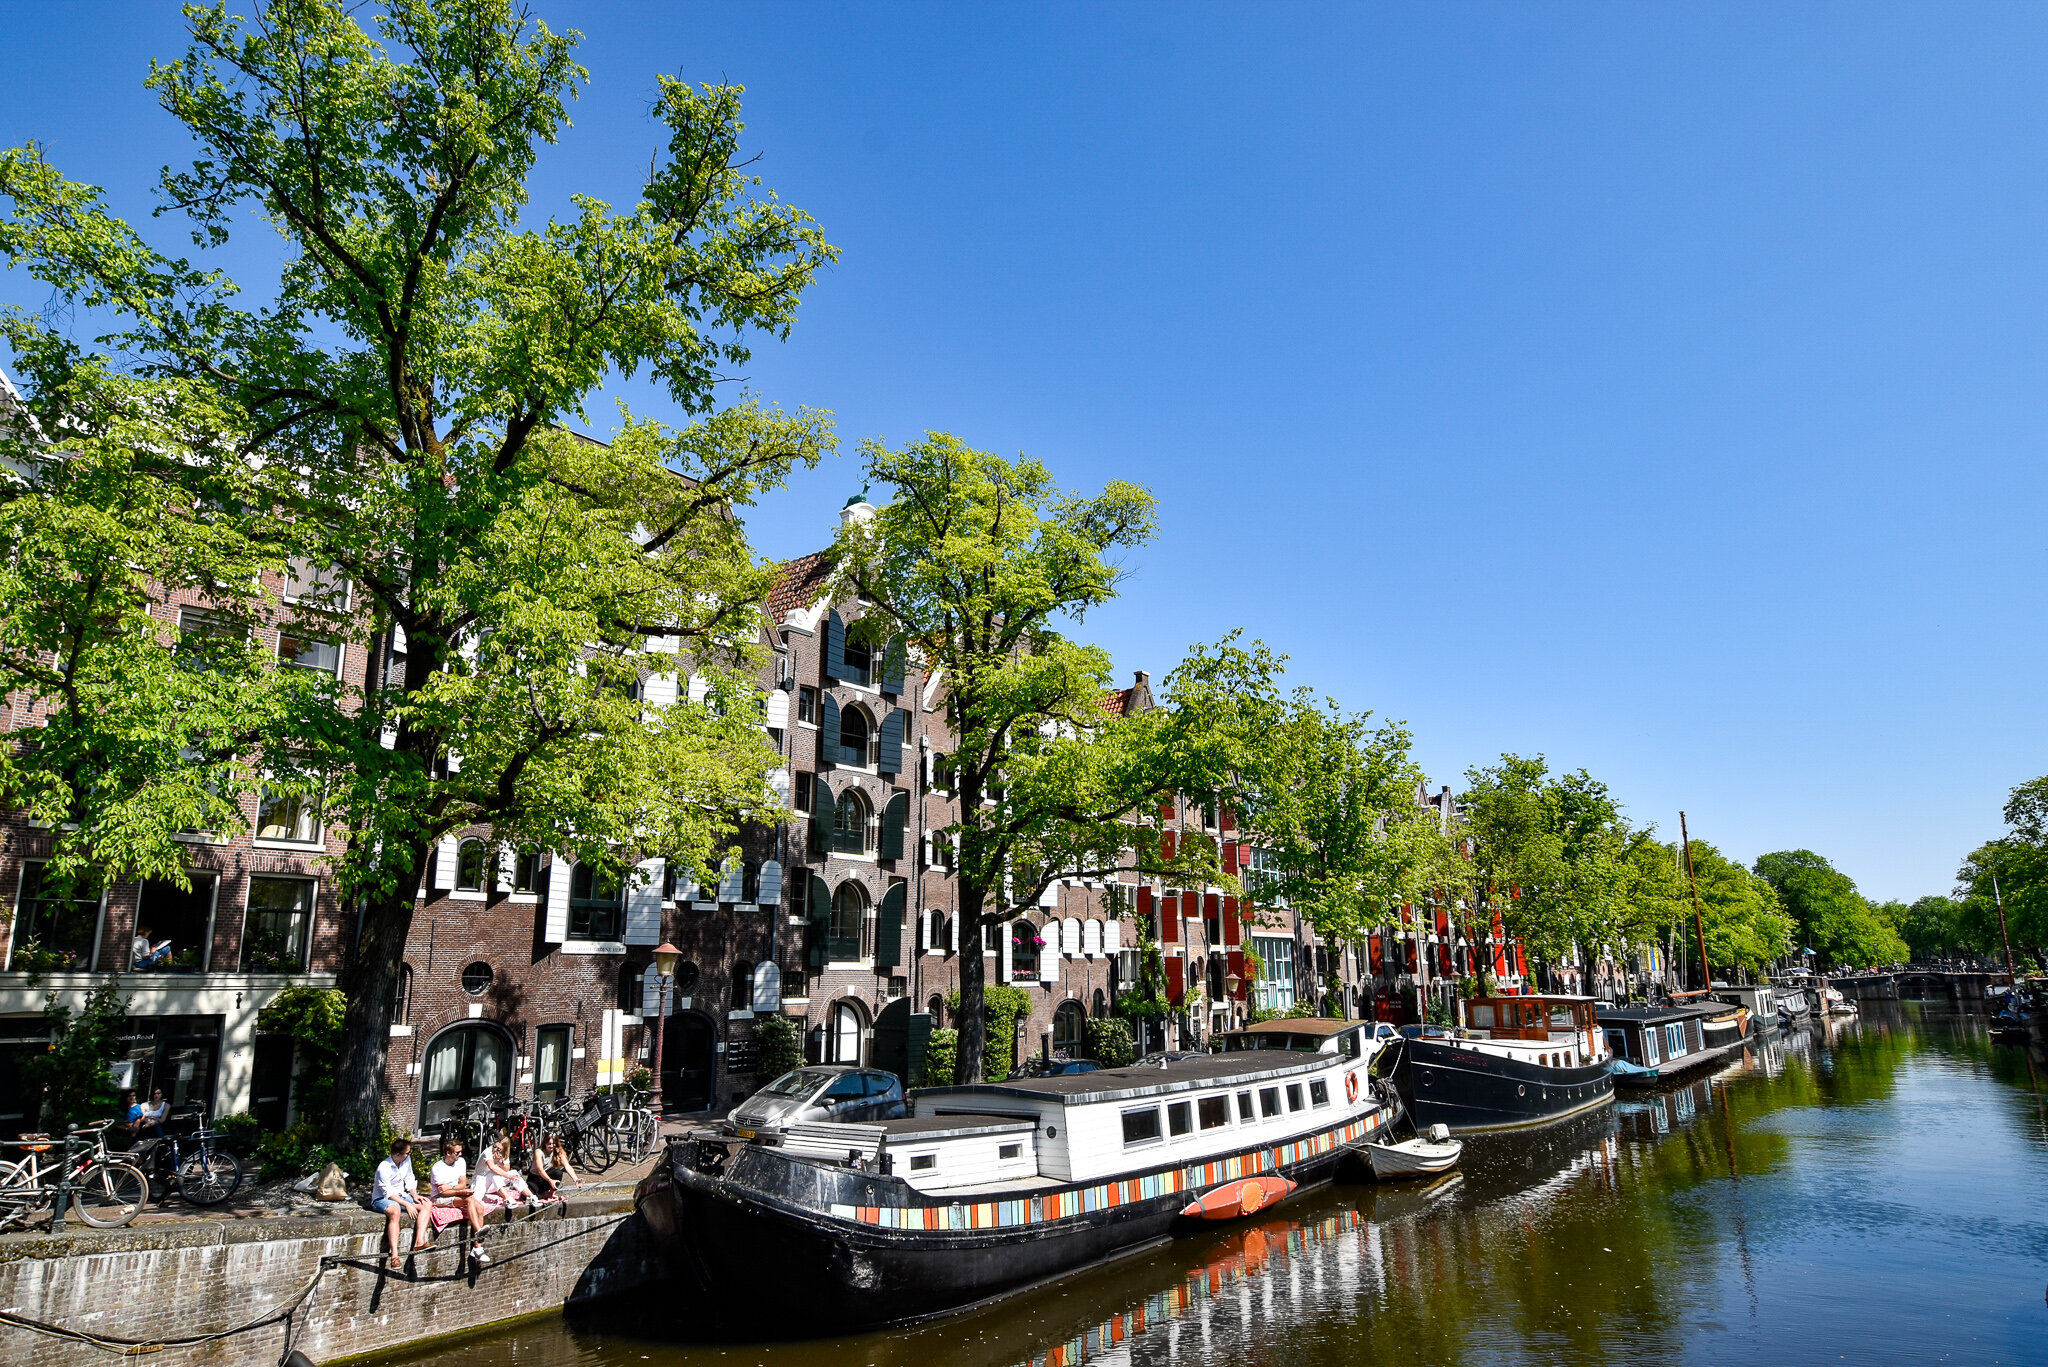 Amsterdam_spring_2020_may-2 Bouwmeesters Asmsterdam.jpg